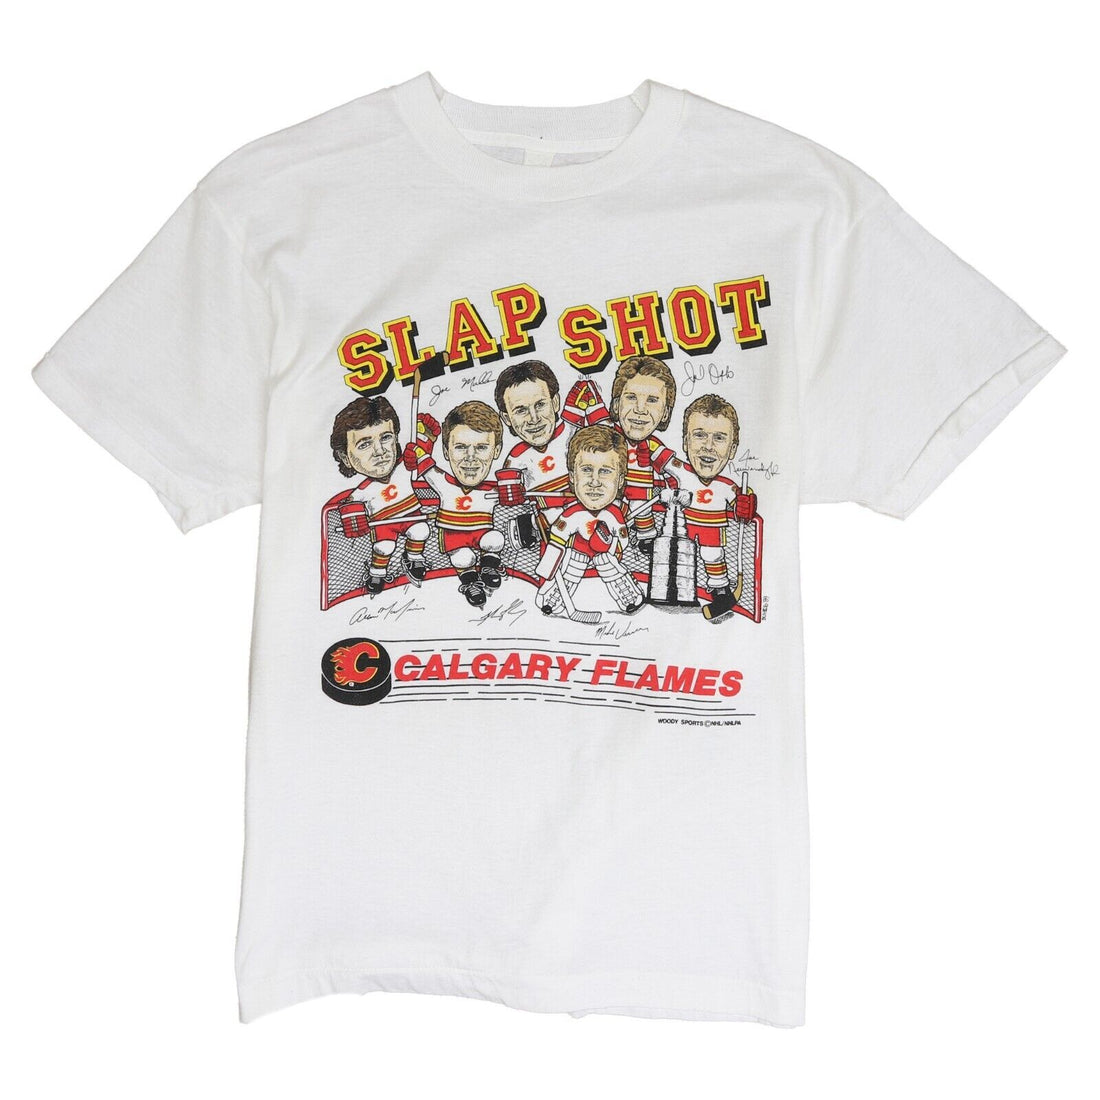 Vintage Calgary Flames Slap Shot Caricature T-Shirt Size Large 1989 80s NHL